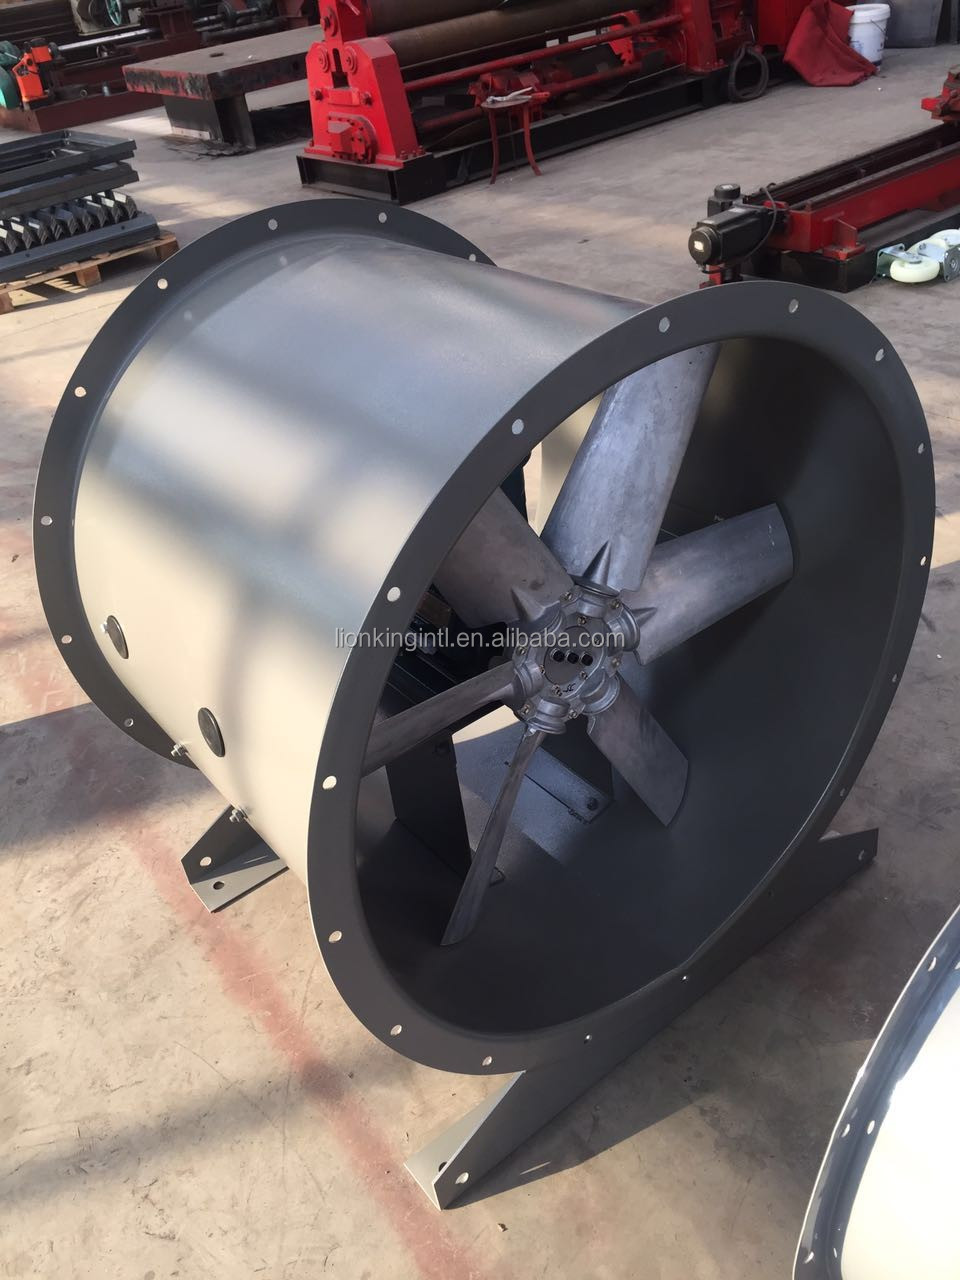 Axial Fan with Aluminium Alloy Impeller